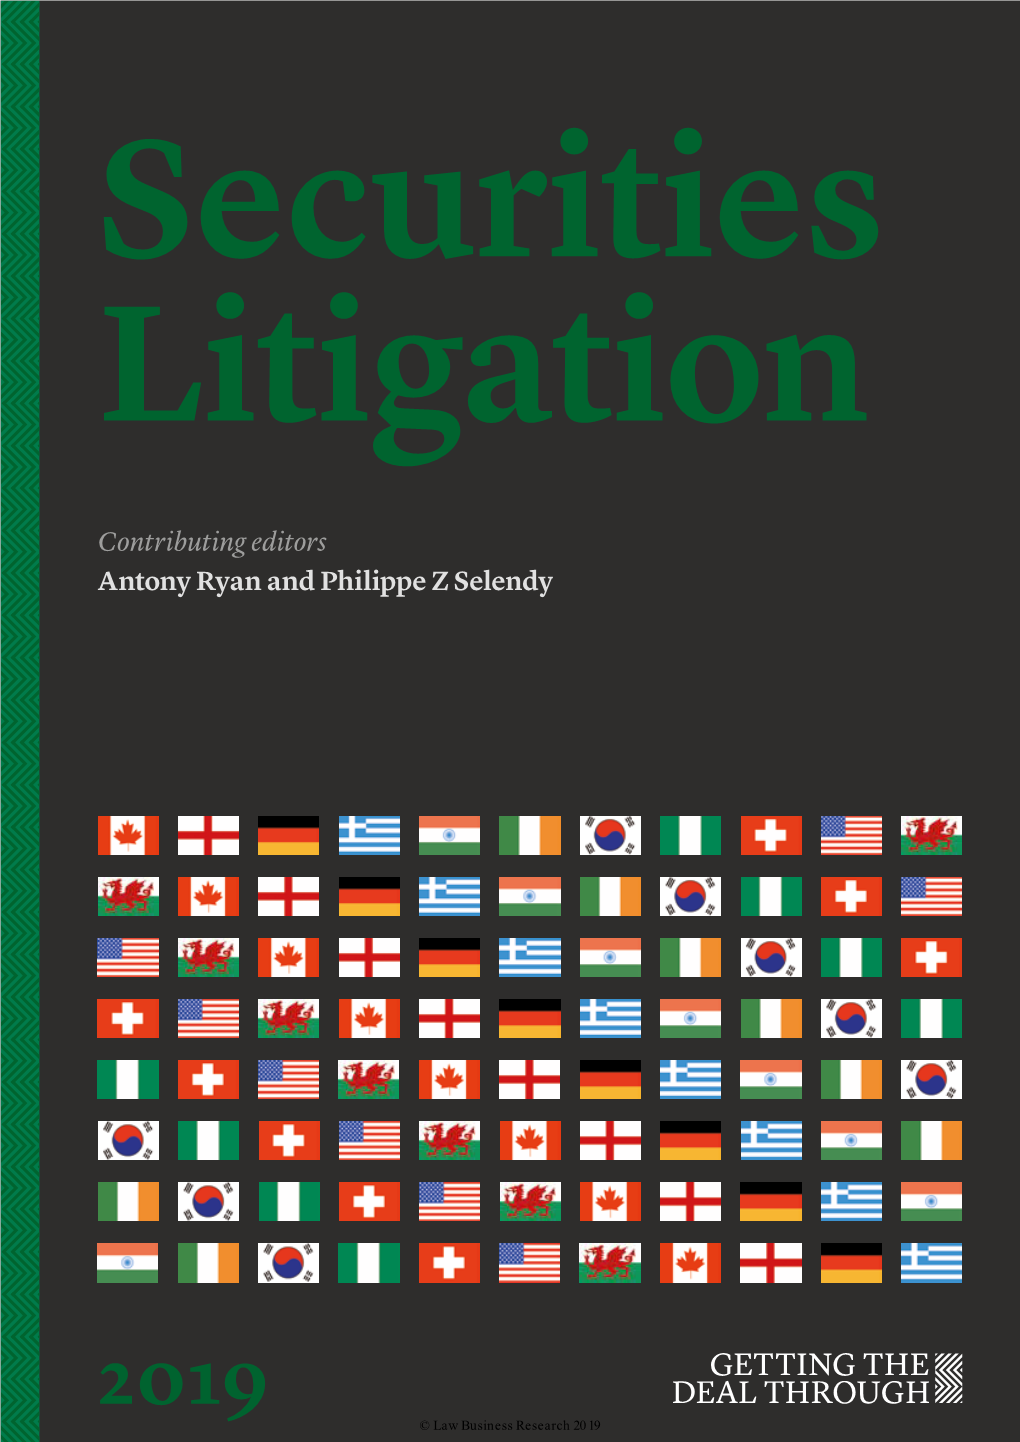 Securities Litigation Contributing Editors Antony Ryan and Philippe Z